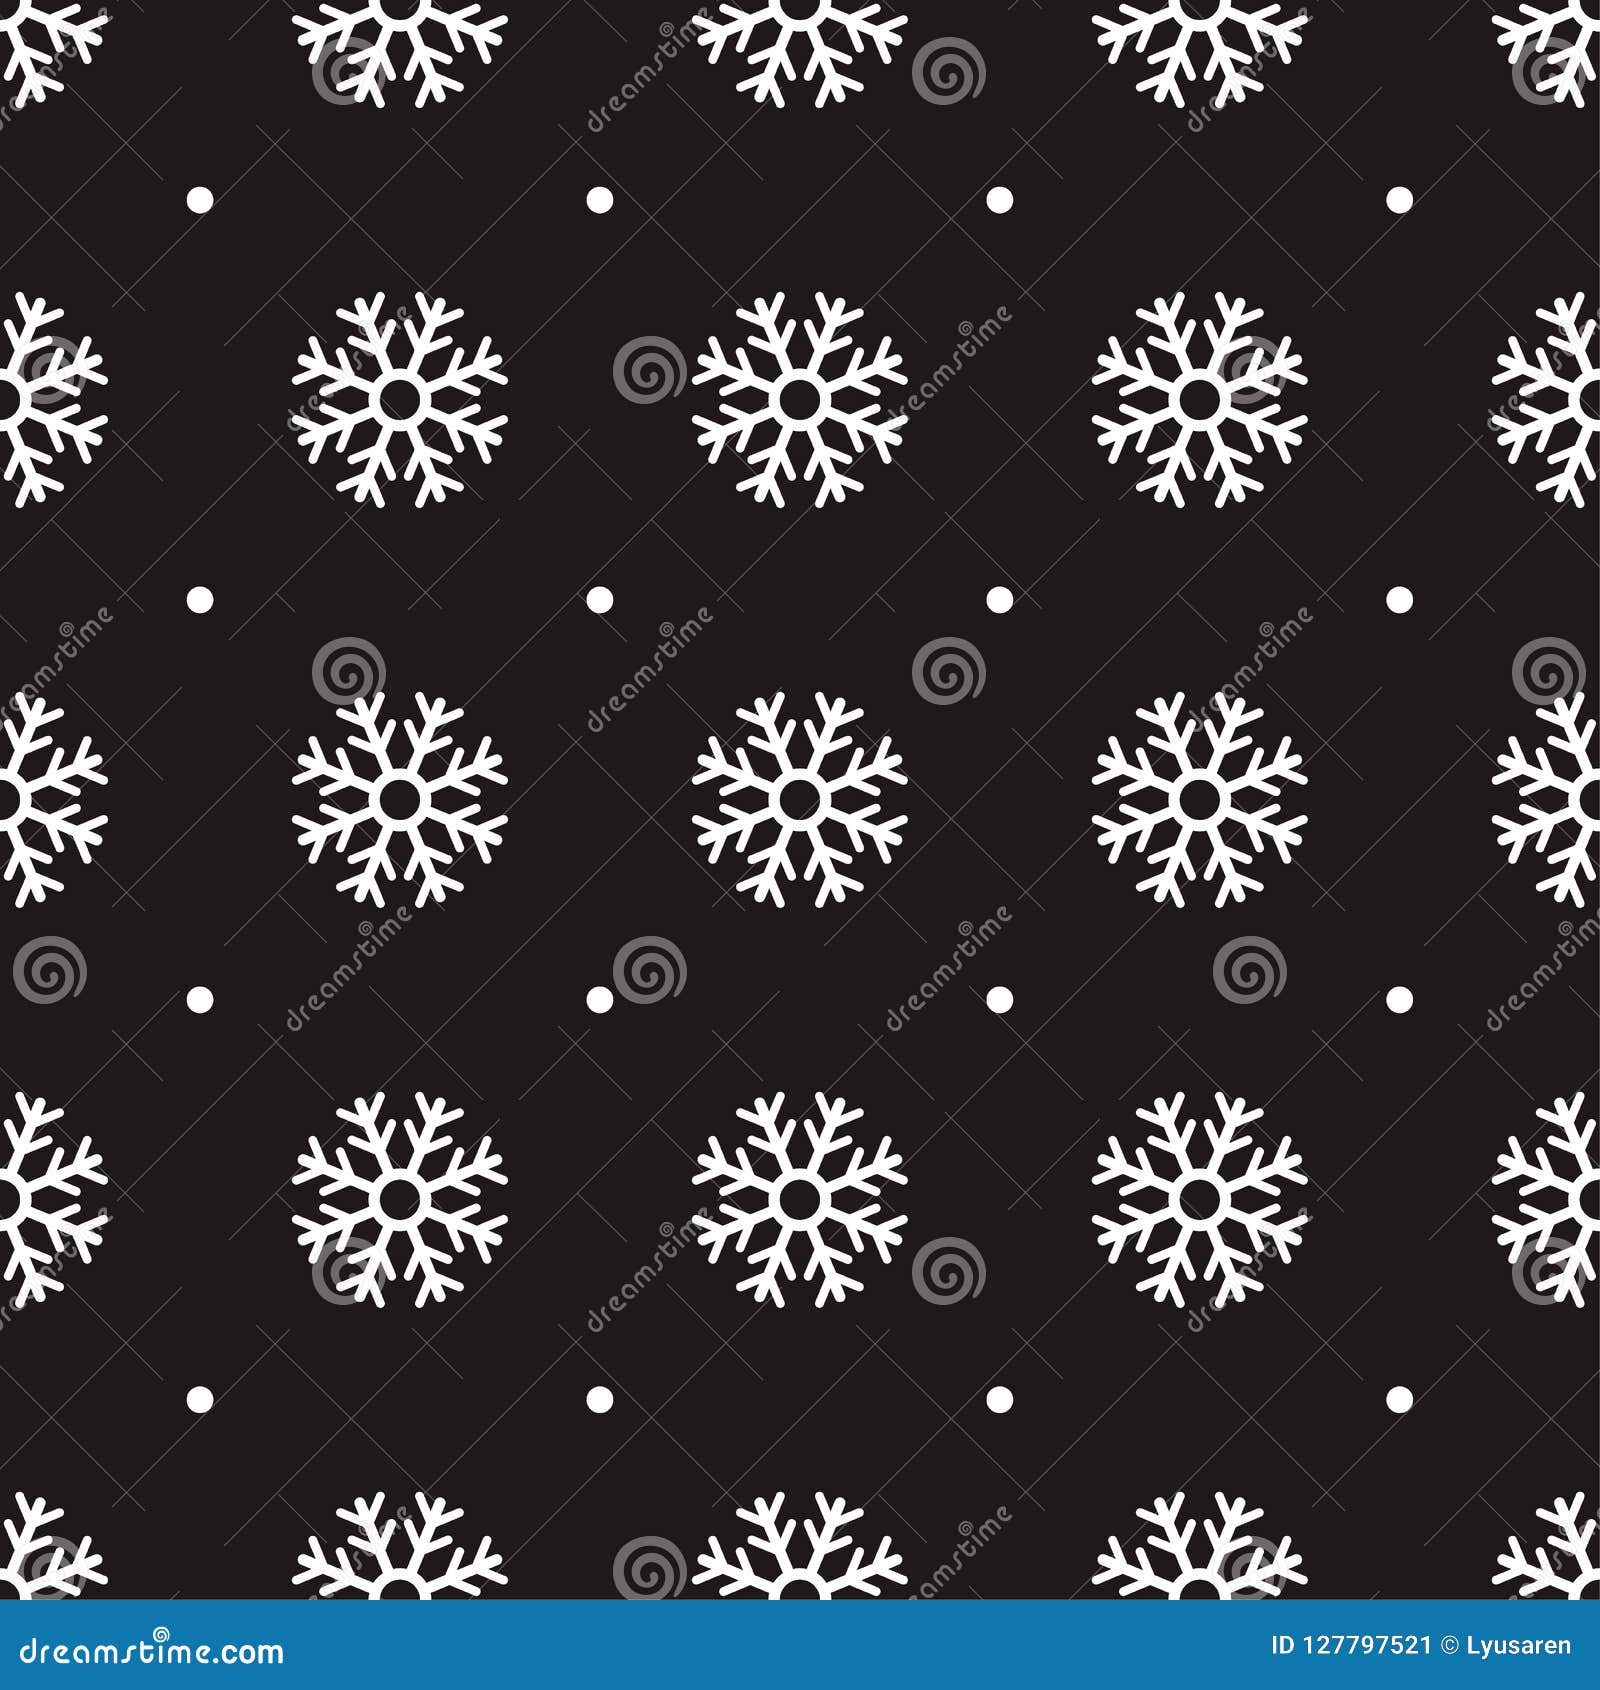 White Snowflakes On Black Background Vector Illustration Stock